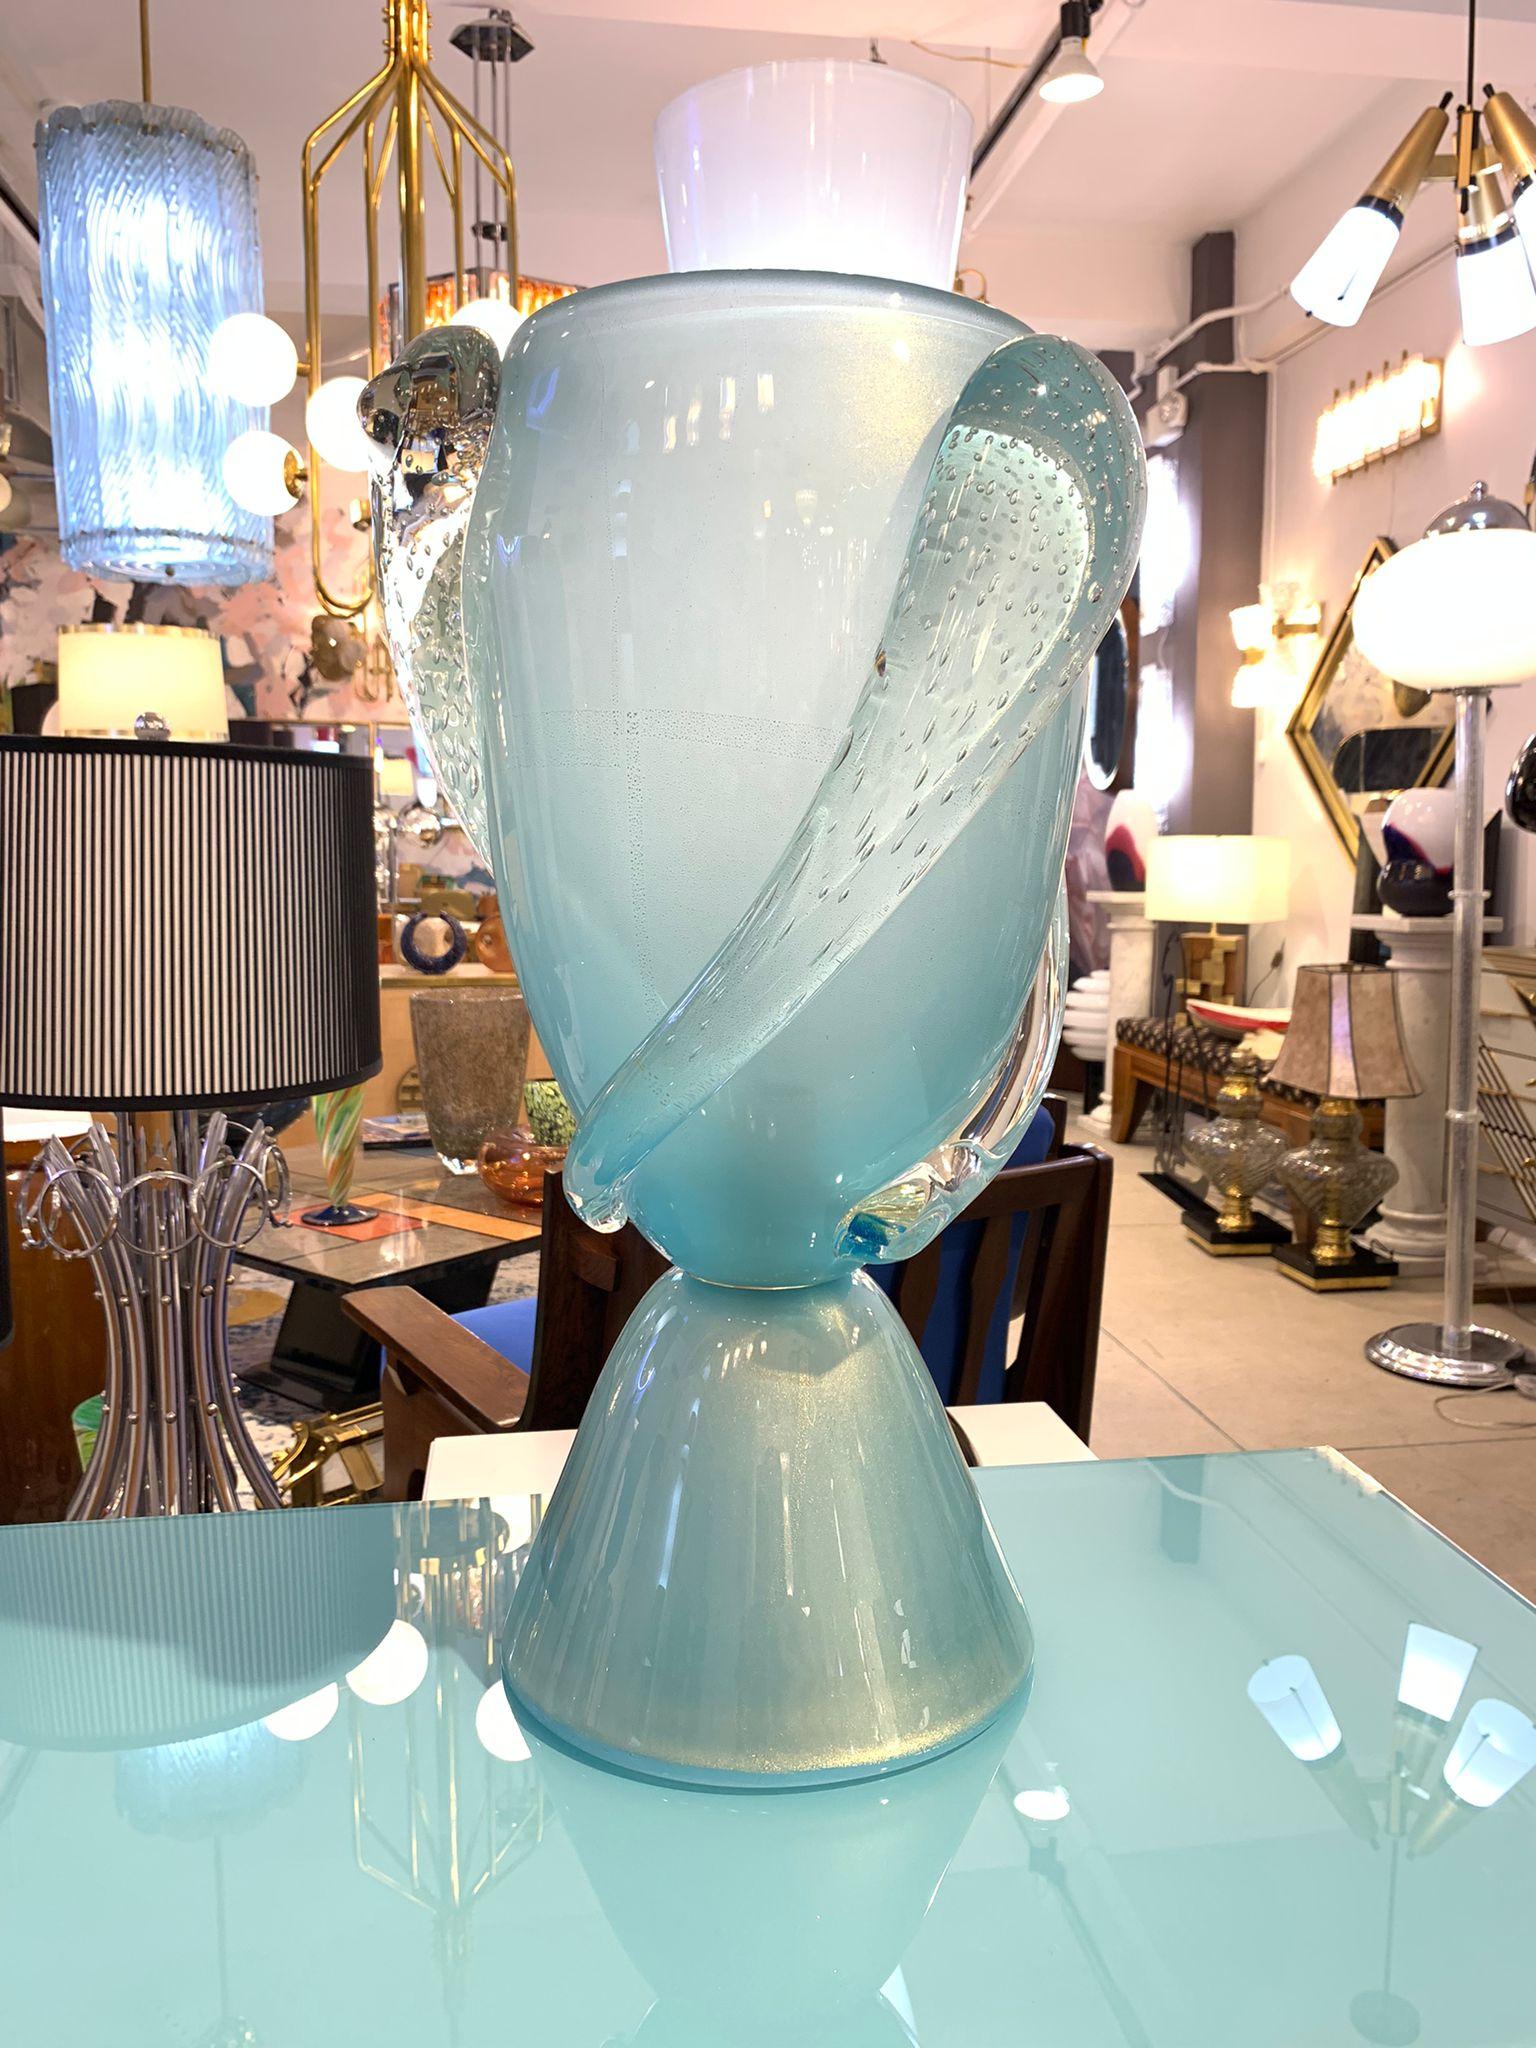 Organique Barovier Toso Lampe organique en verre de Murano bleu aqua, contemporaine et moderne italienne en vente